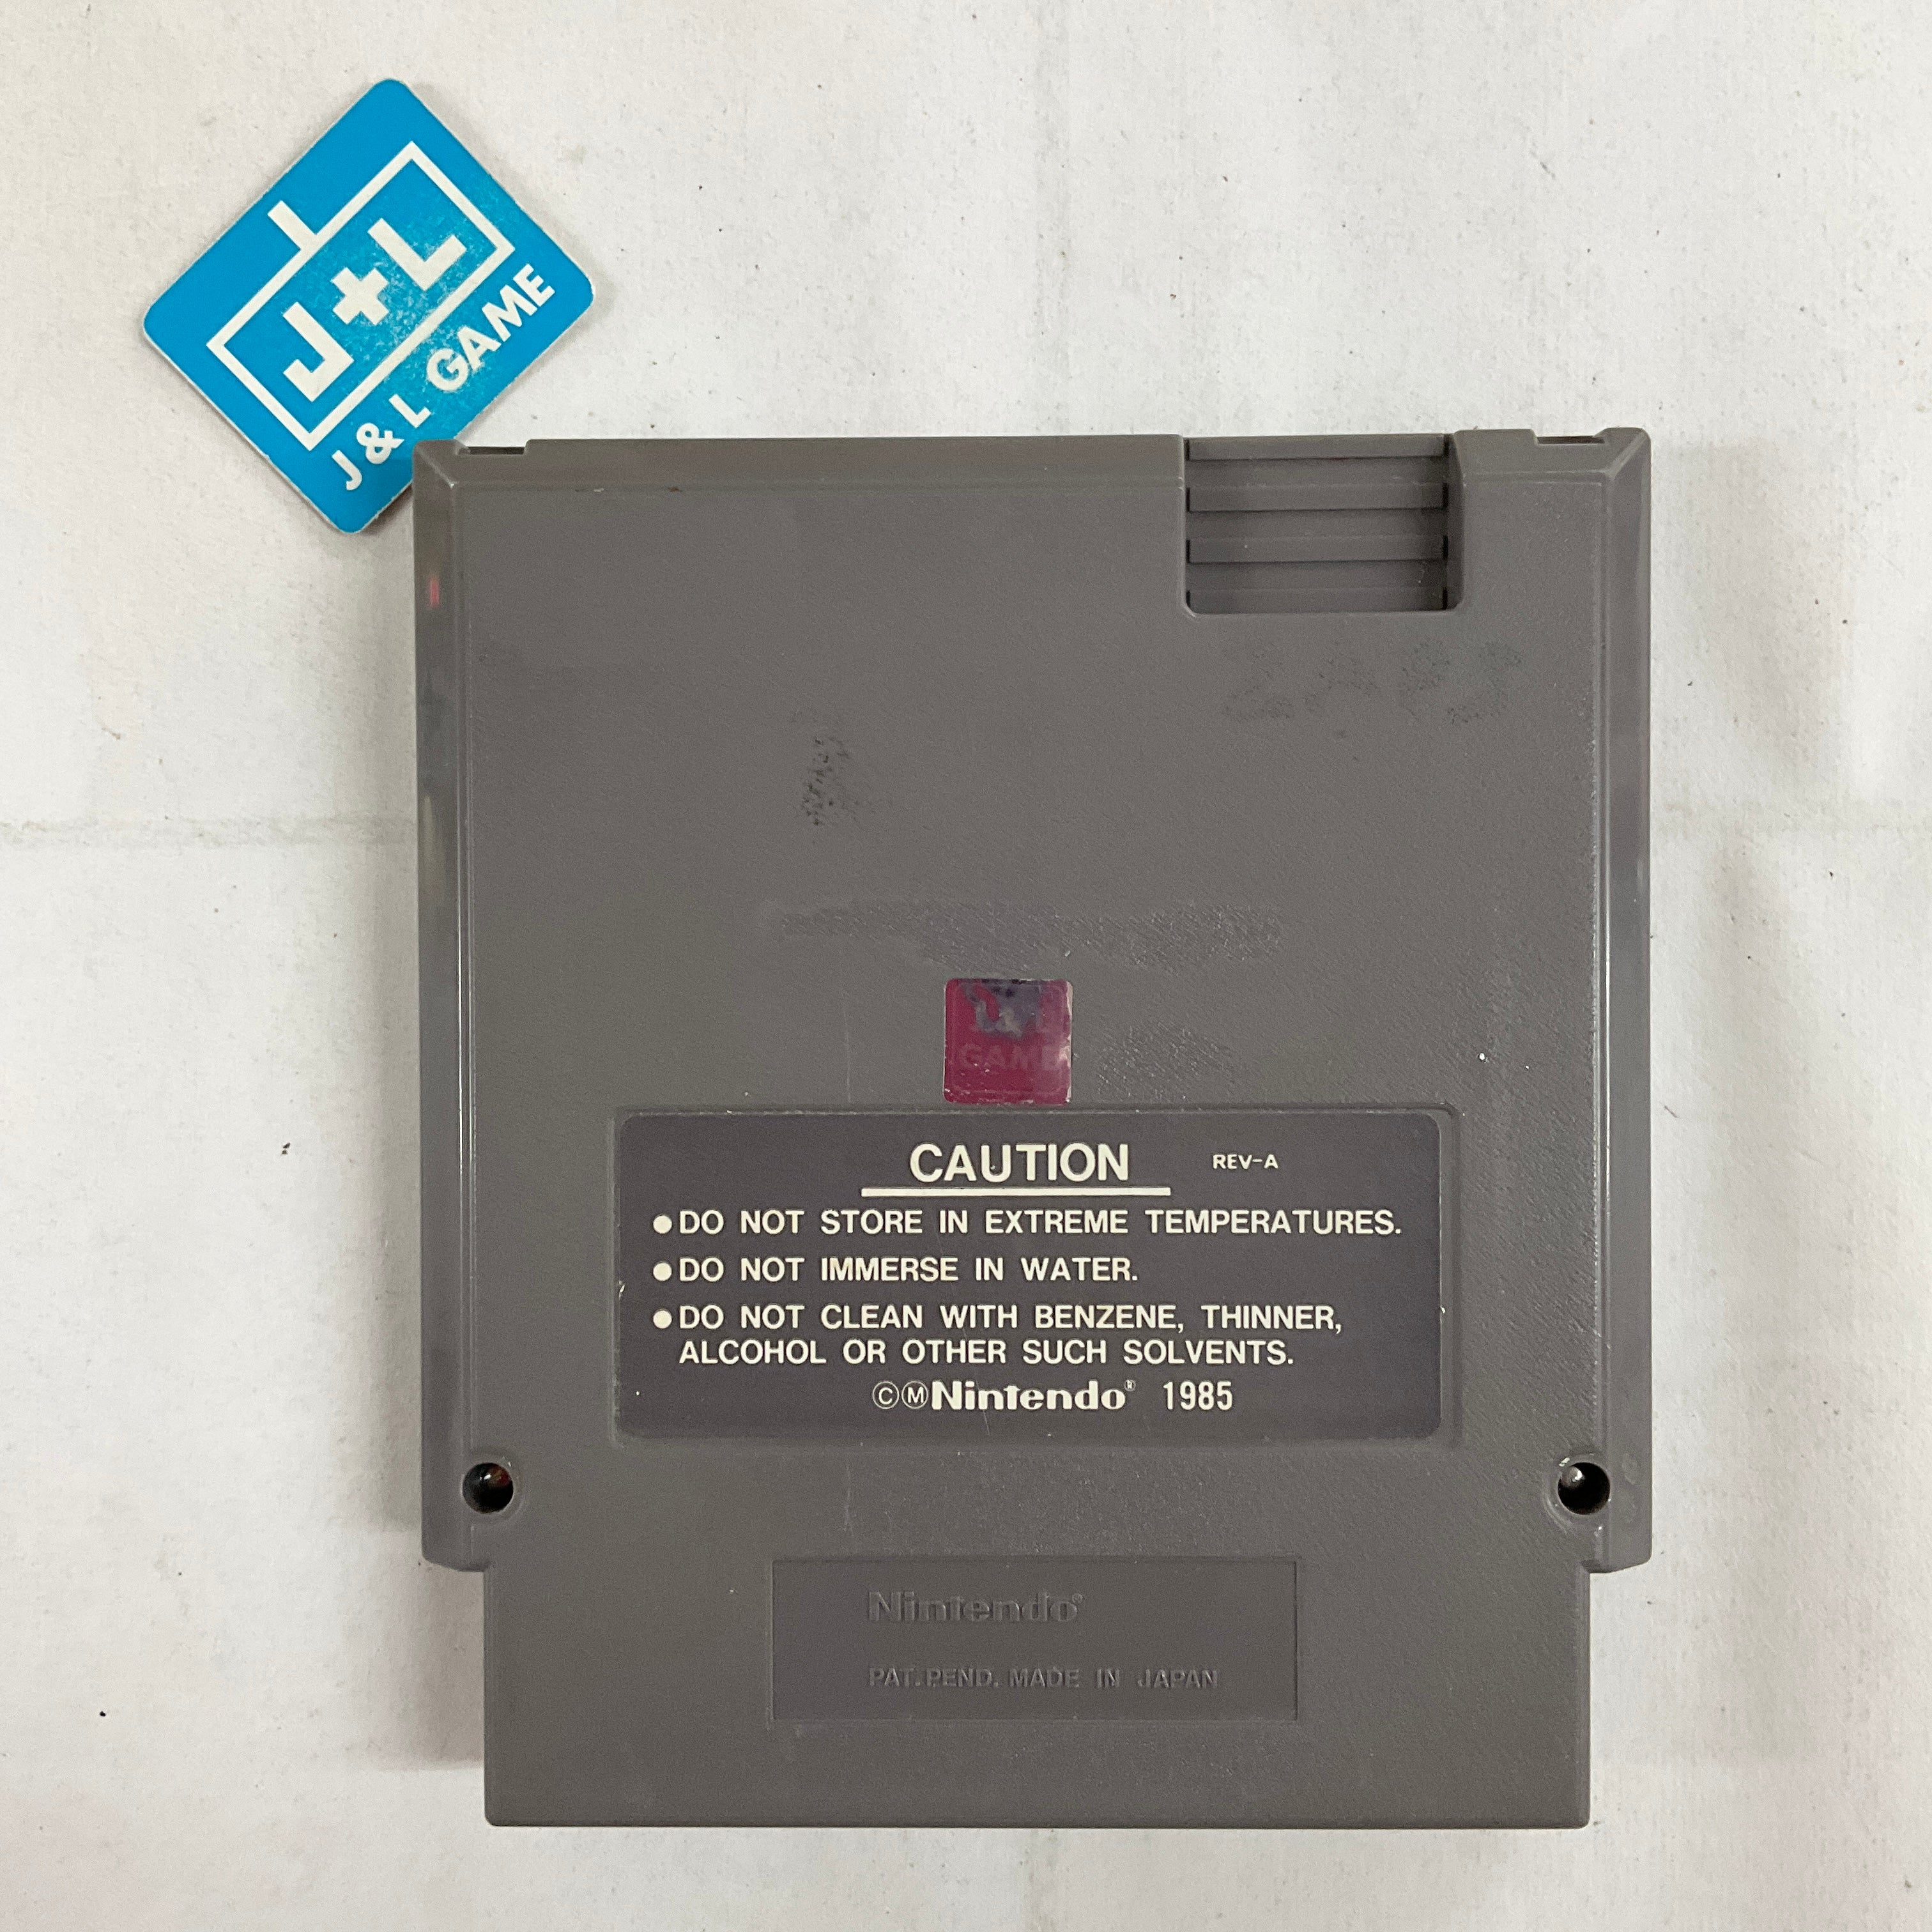 Ninja Gaiden - (NES) Nintendo Entertainment System [Pre-Owned] Video Games Tecmo   